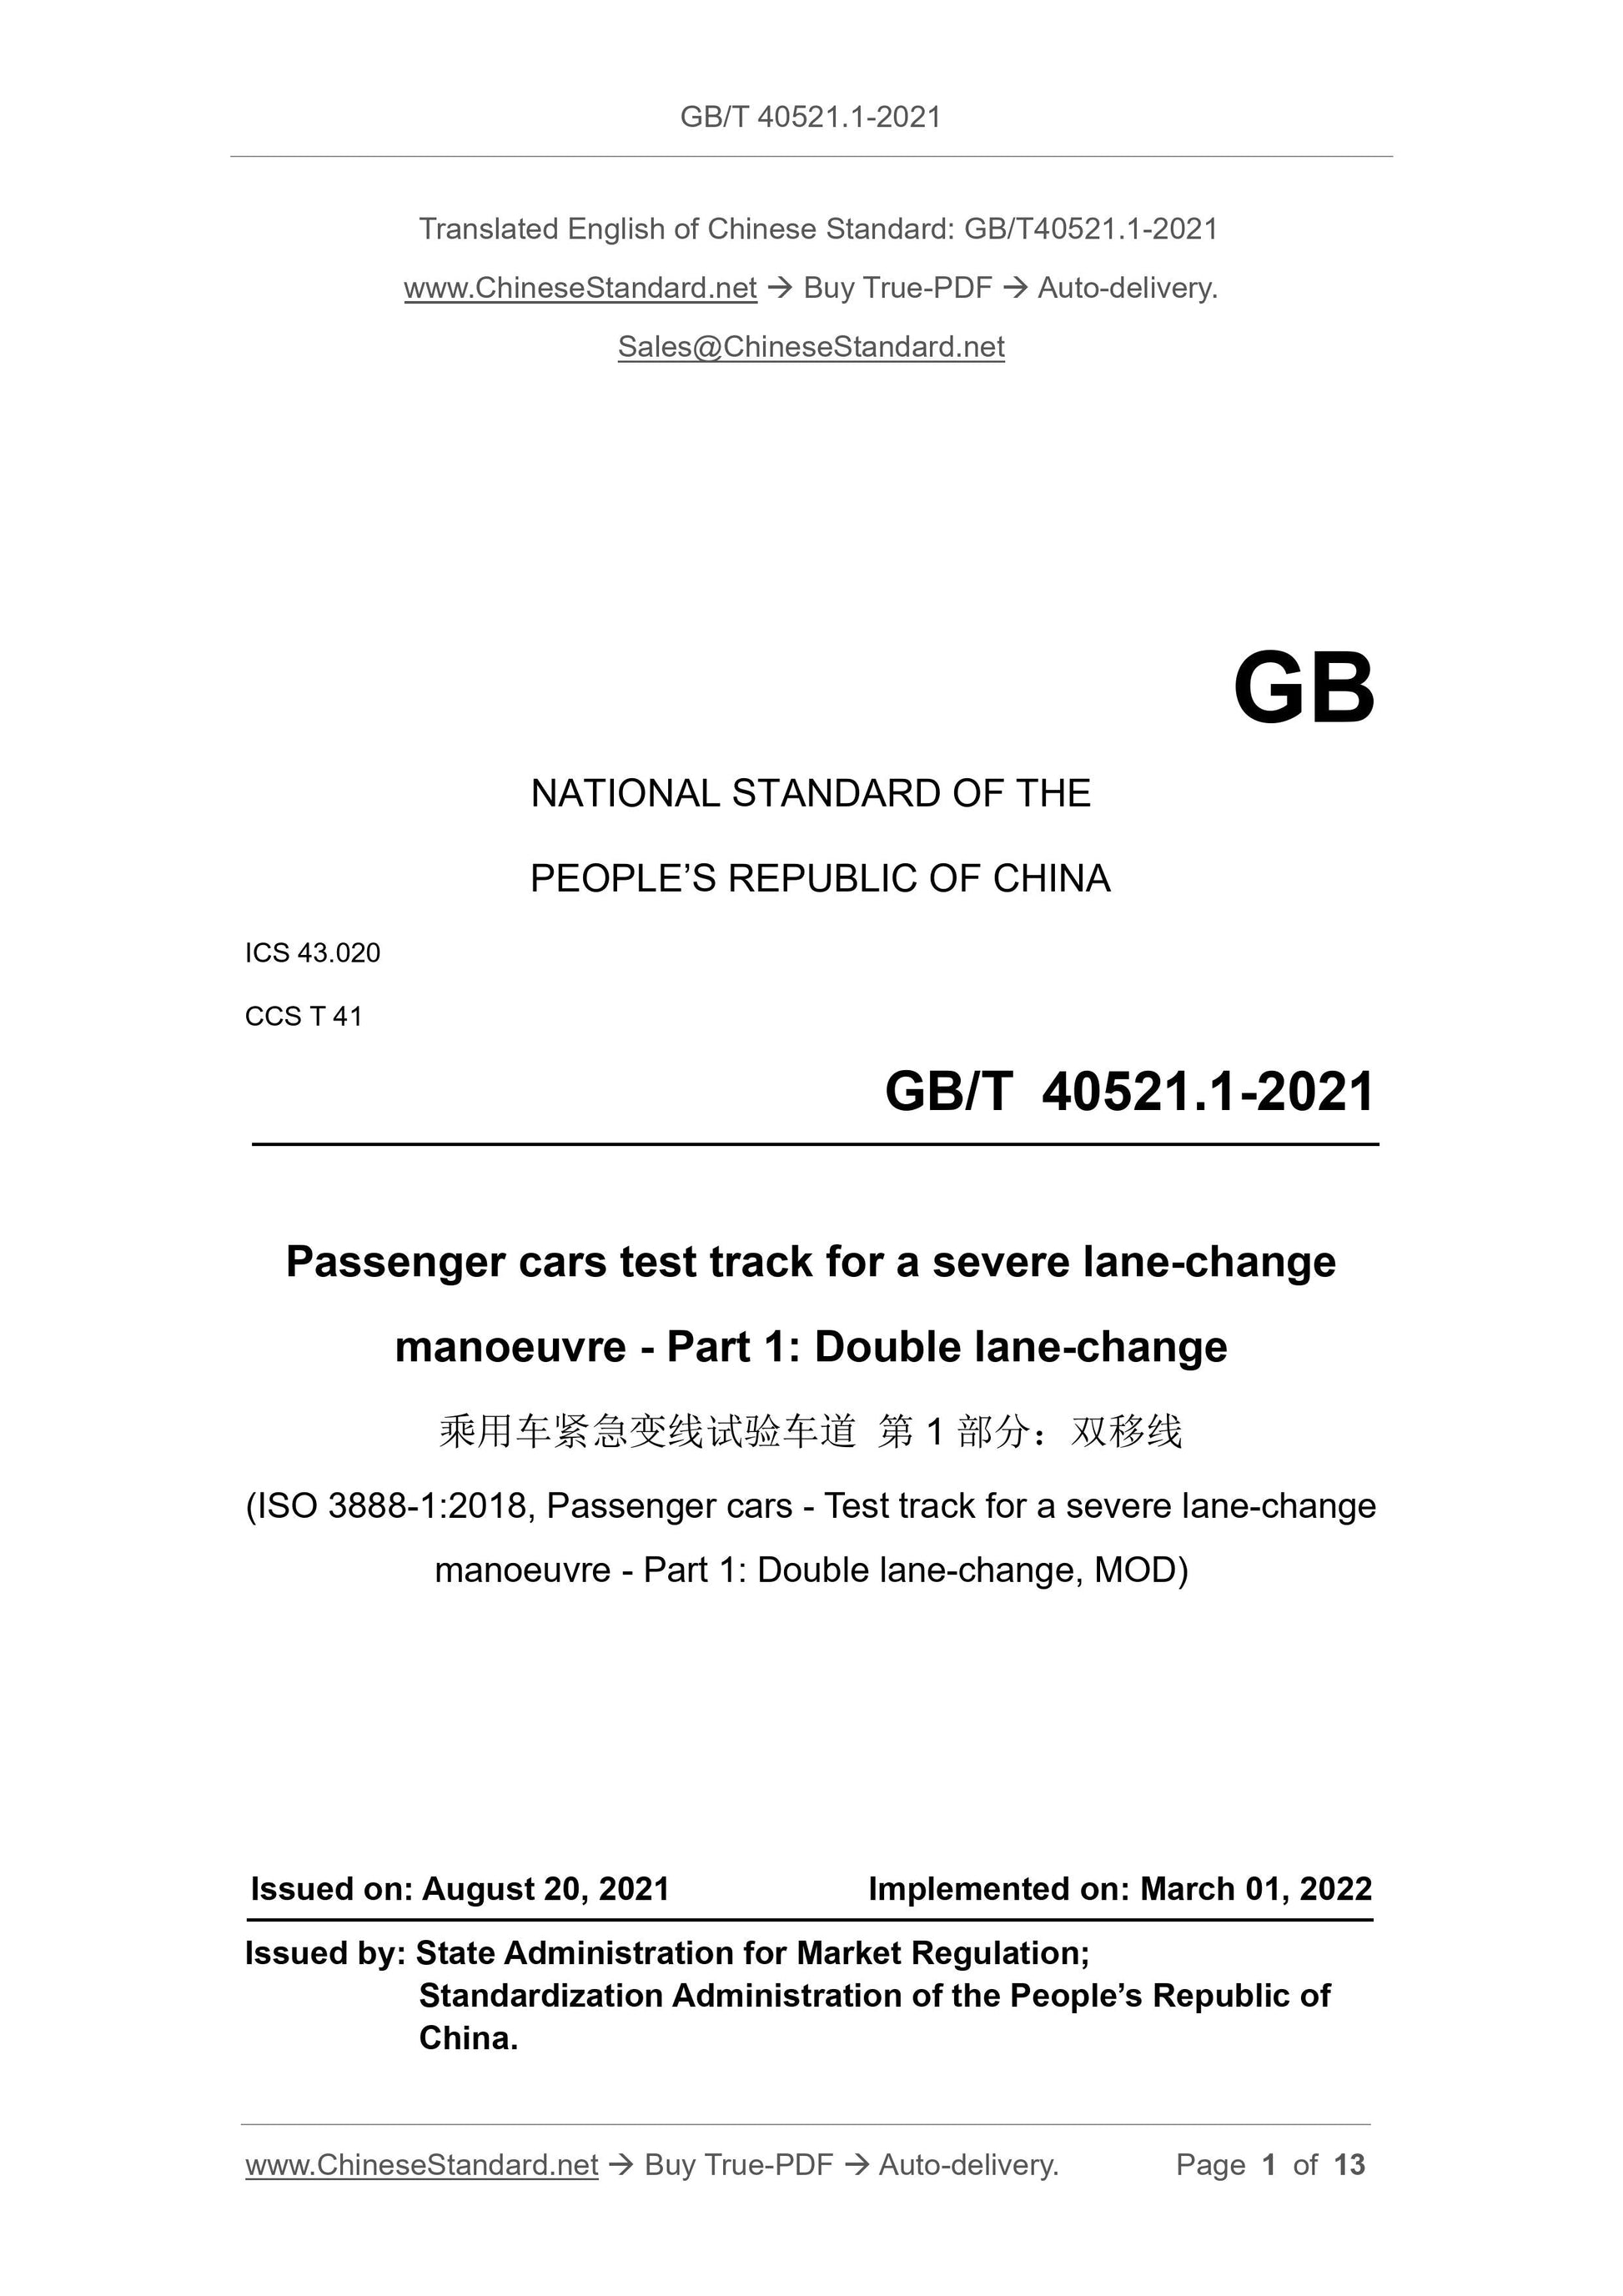 GBT40521.1-2021 Page 1